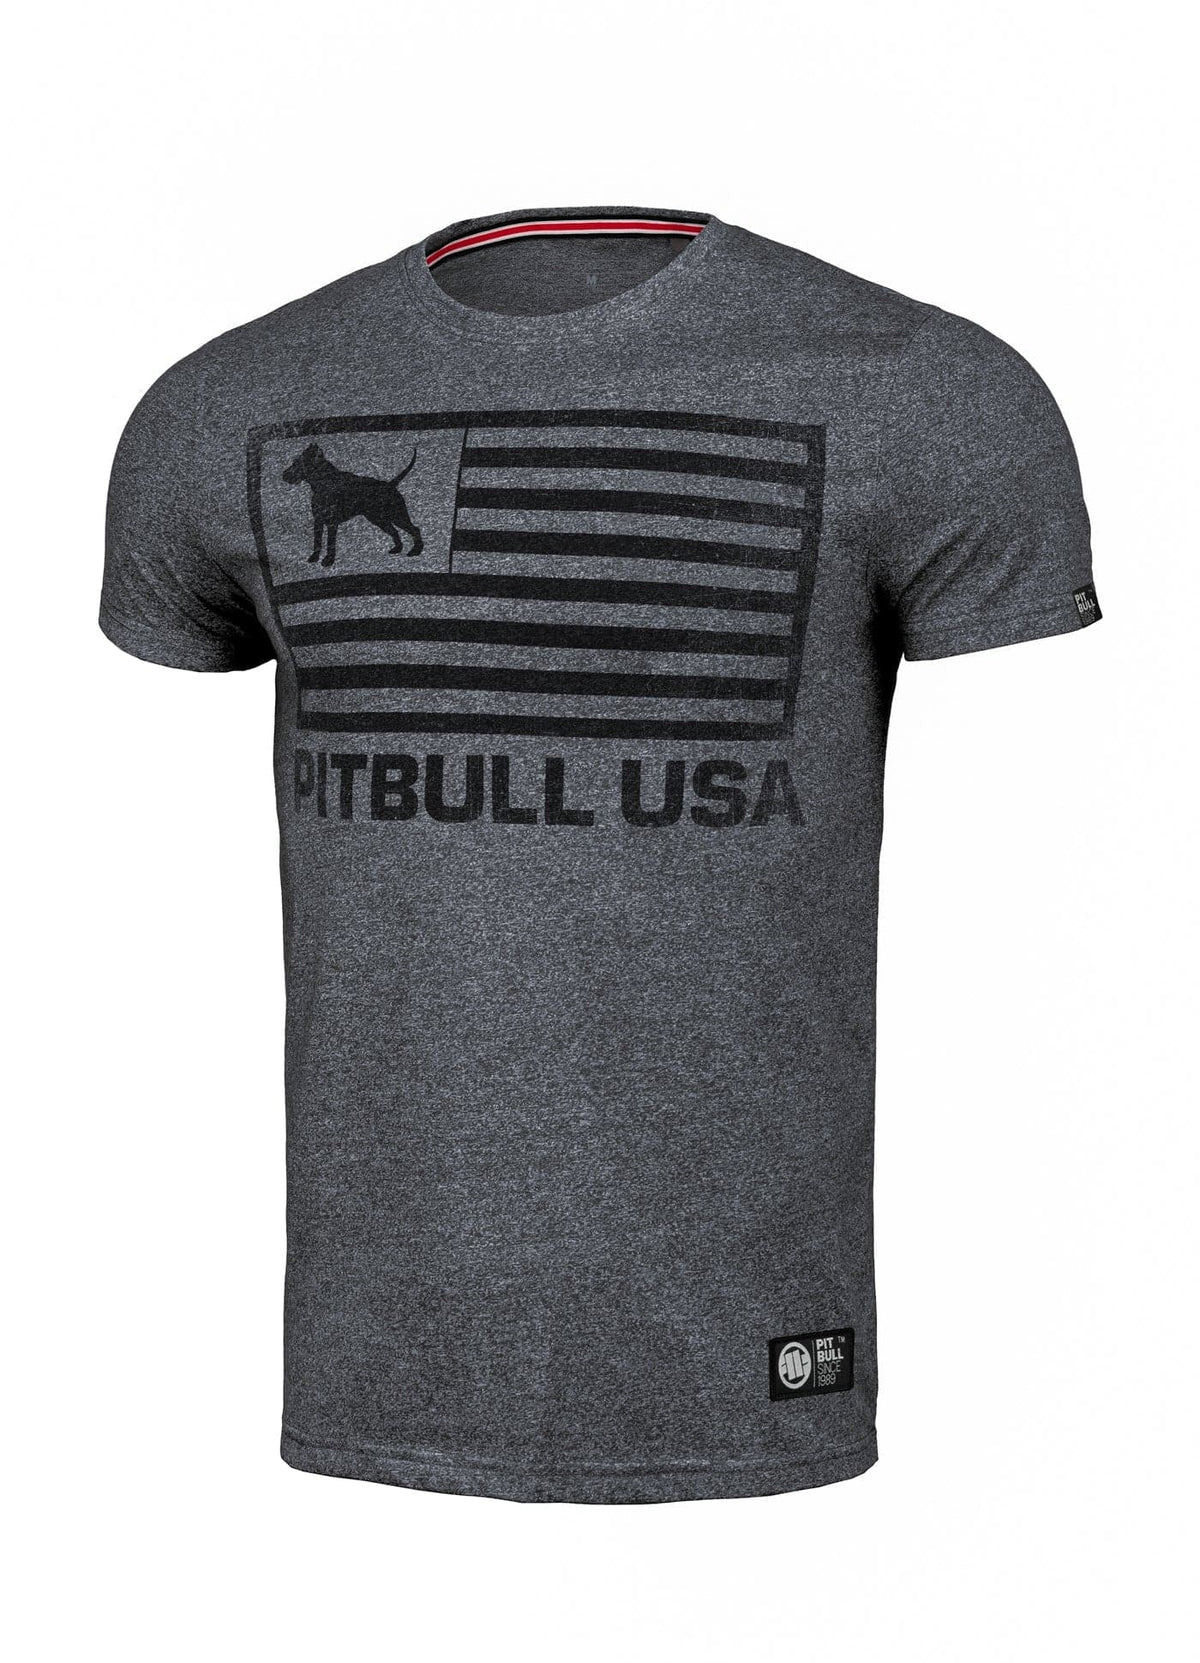 PITBULL USA Navy Melange T-Shirt